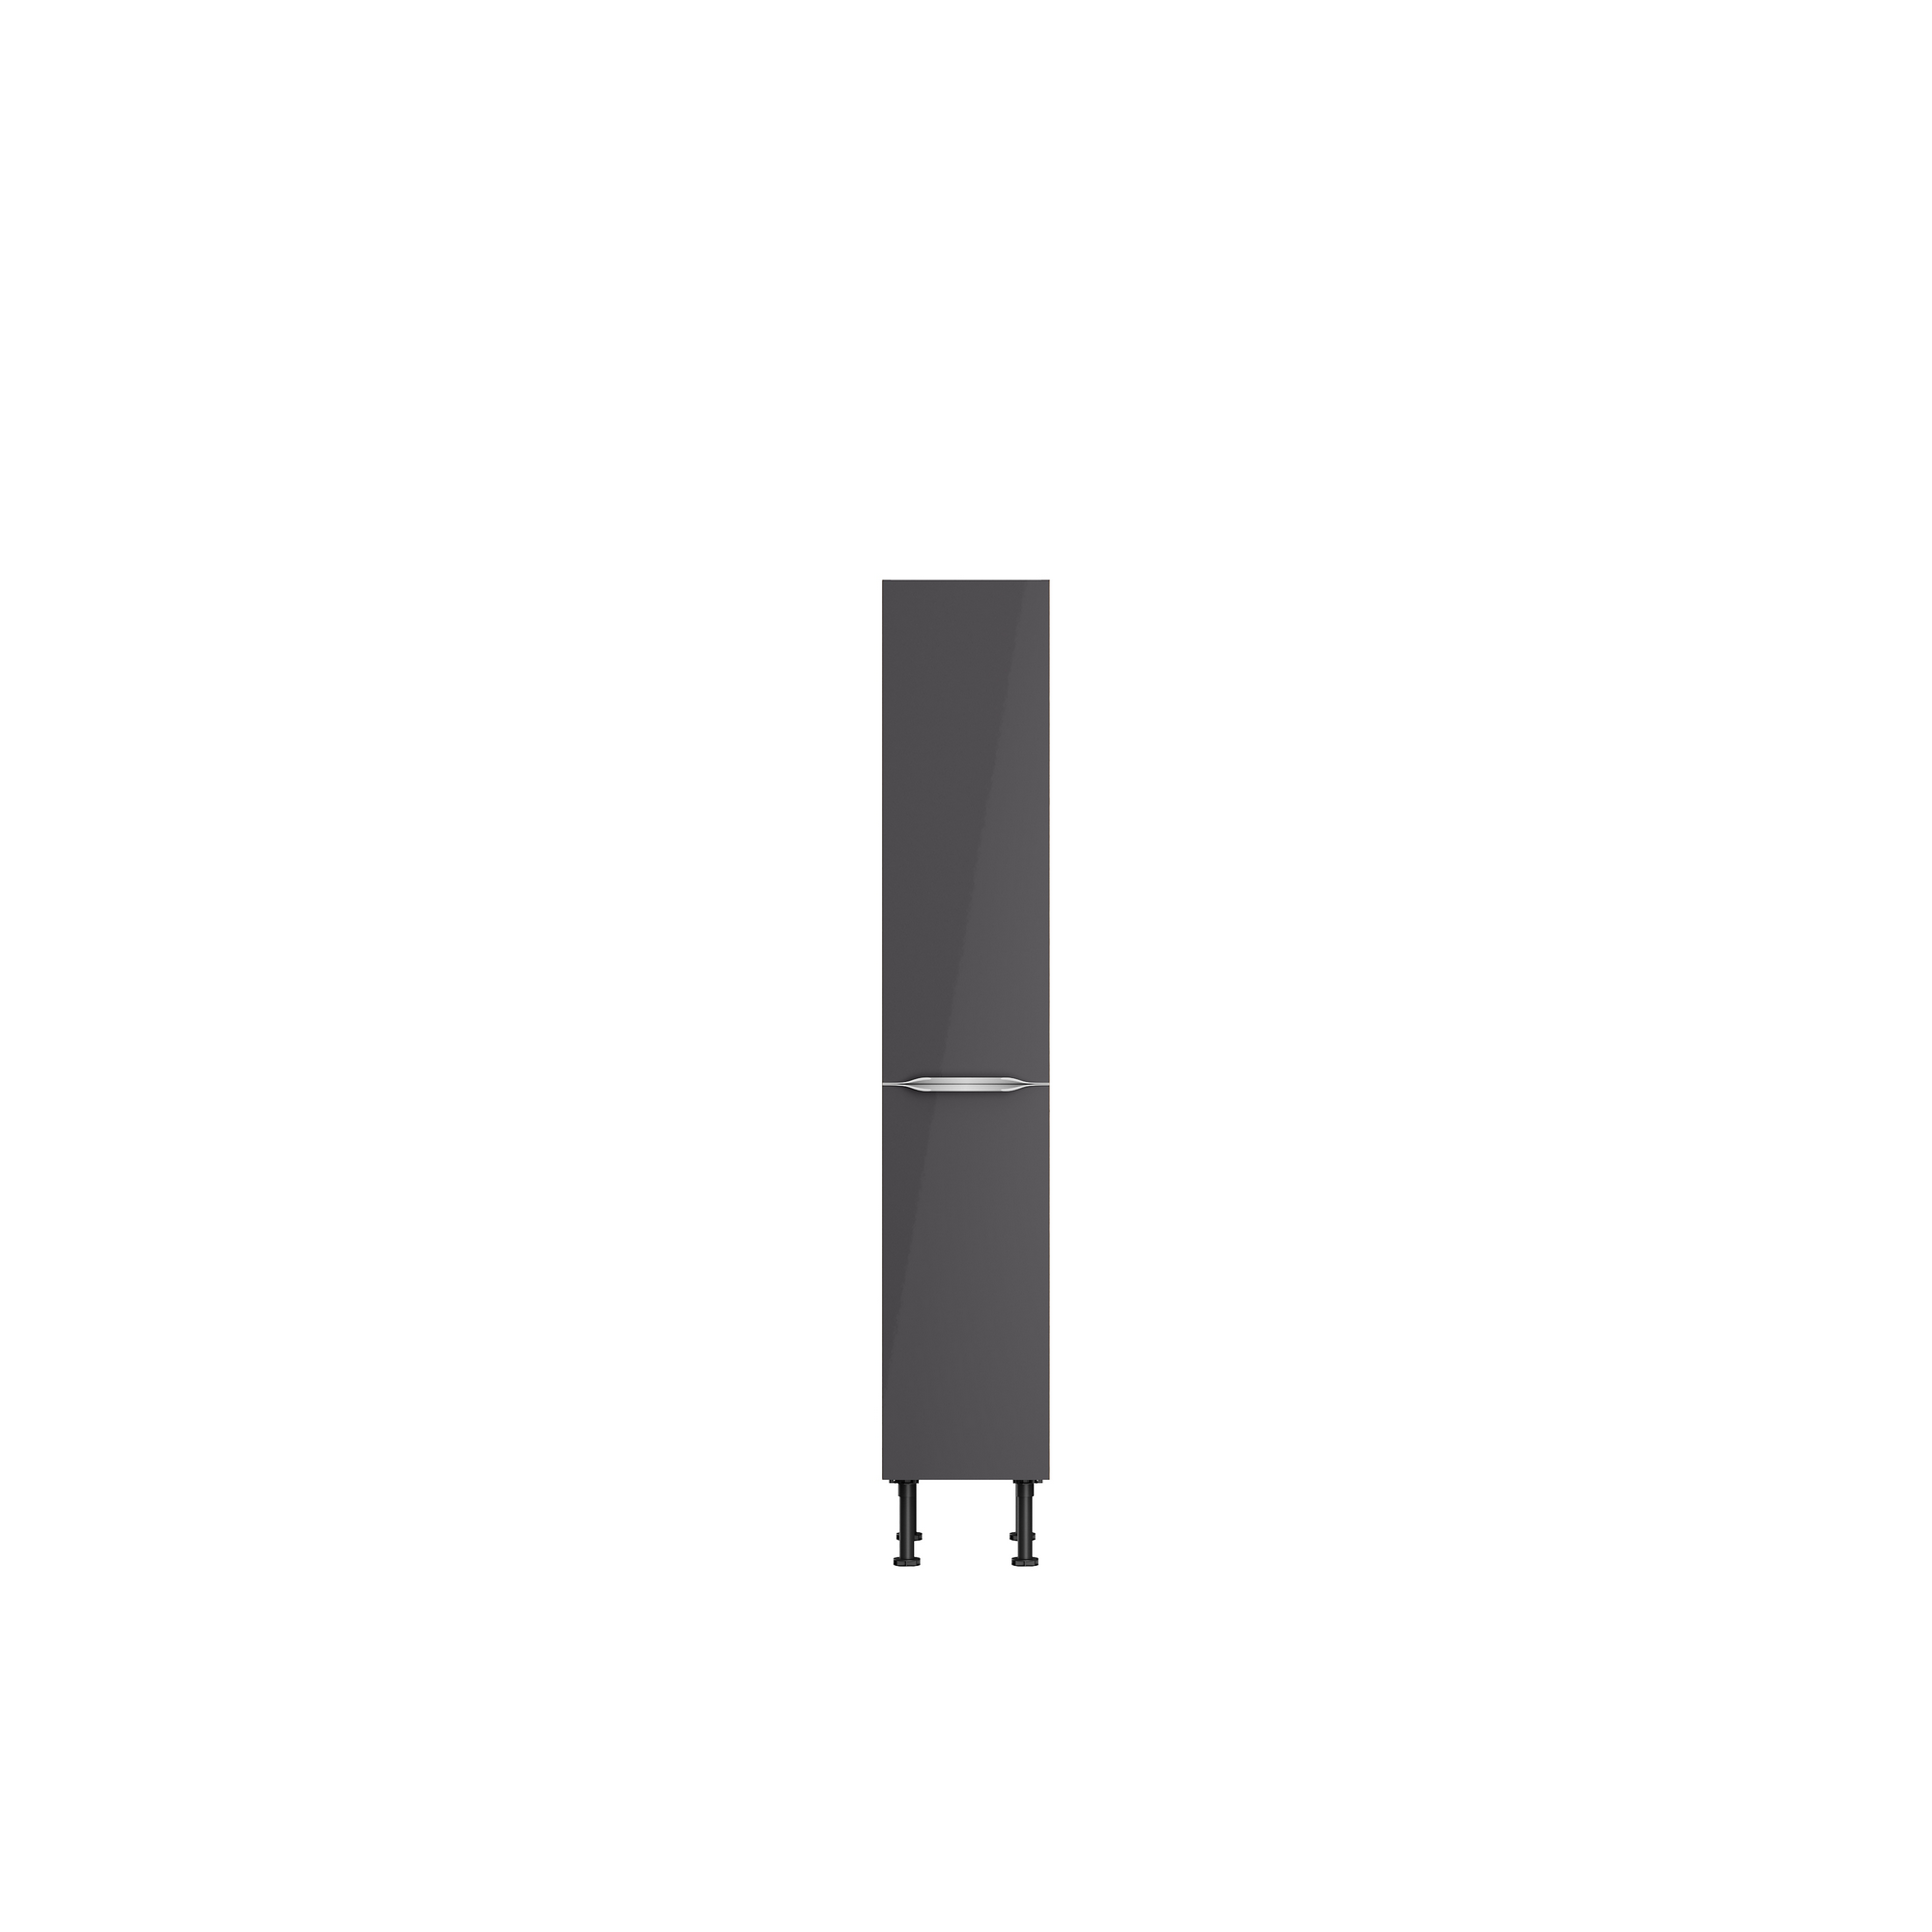 Midischrank 'Optikomfort Linus984' anthrazit/eichefarben 30 x 176,6 x 58,4 cm + product picture